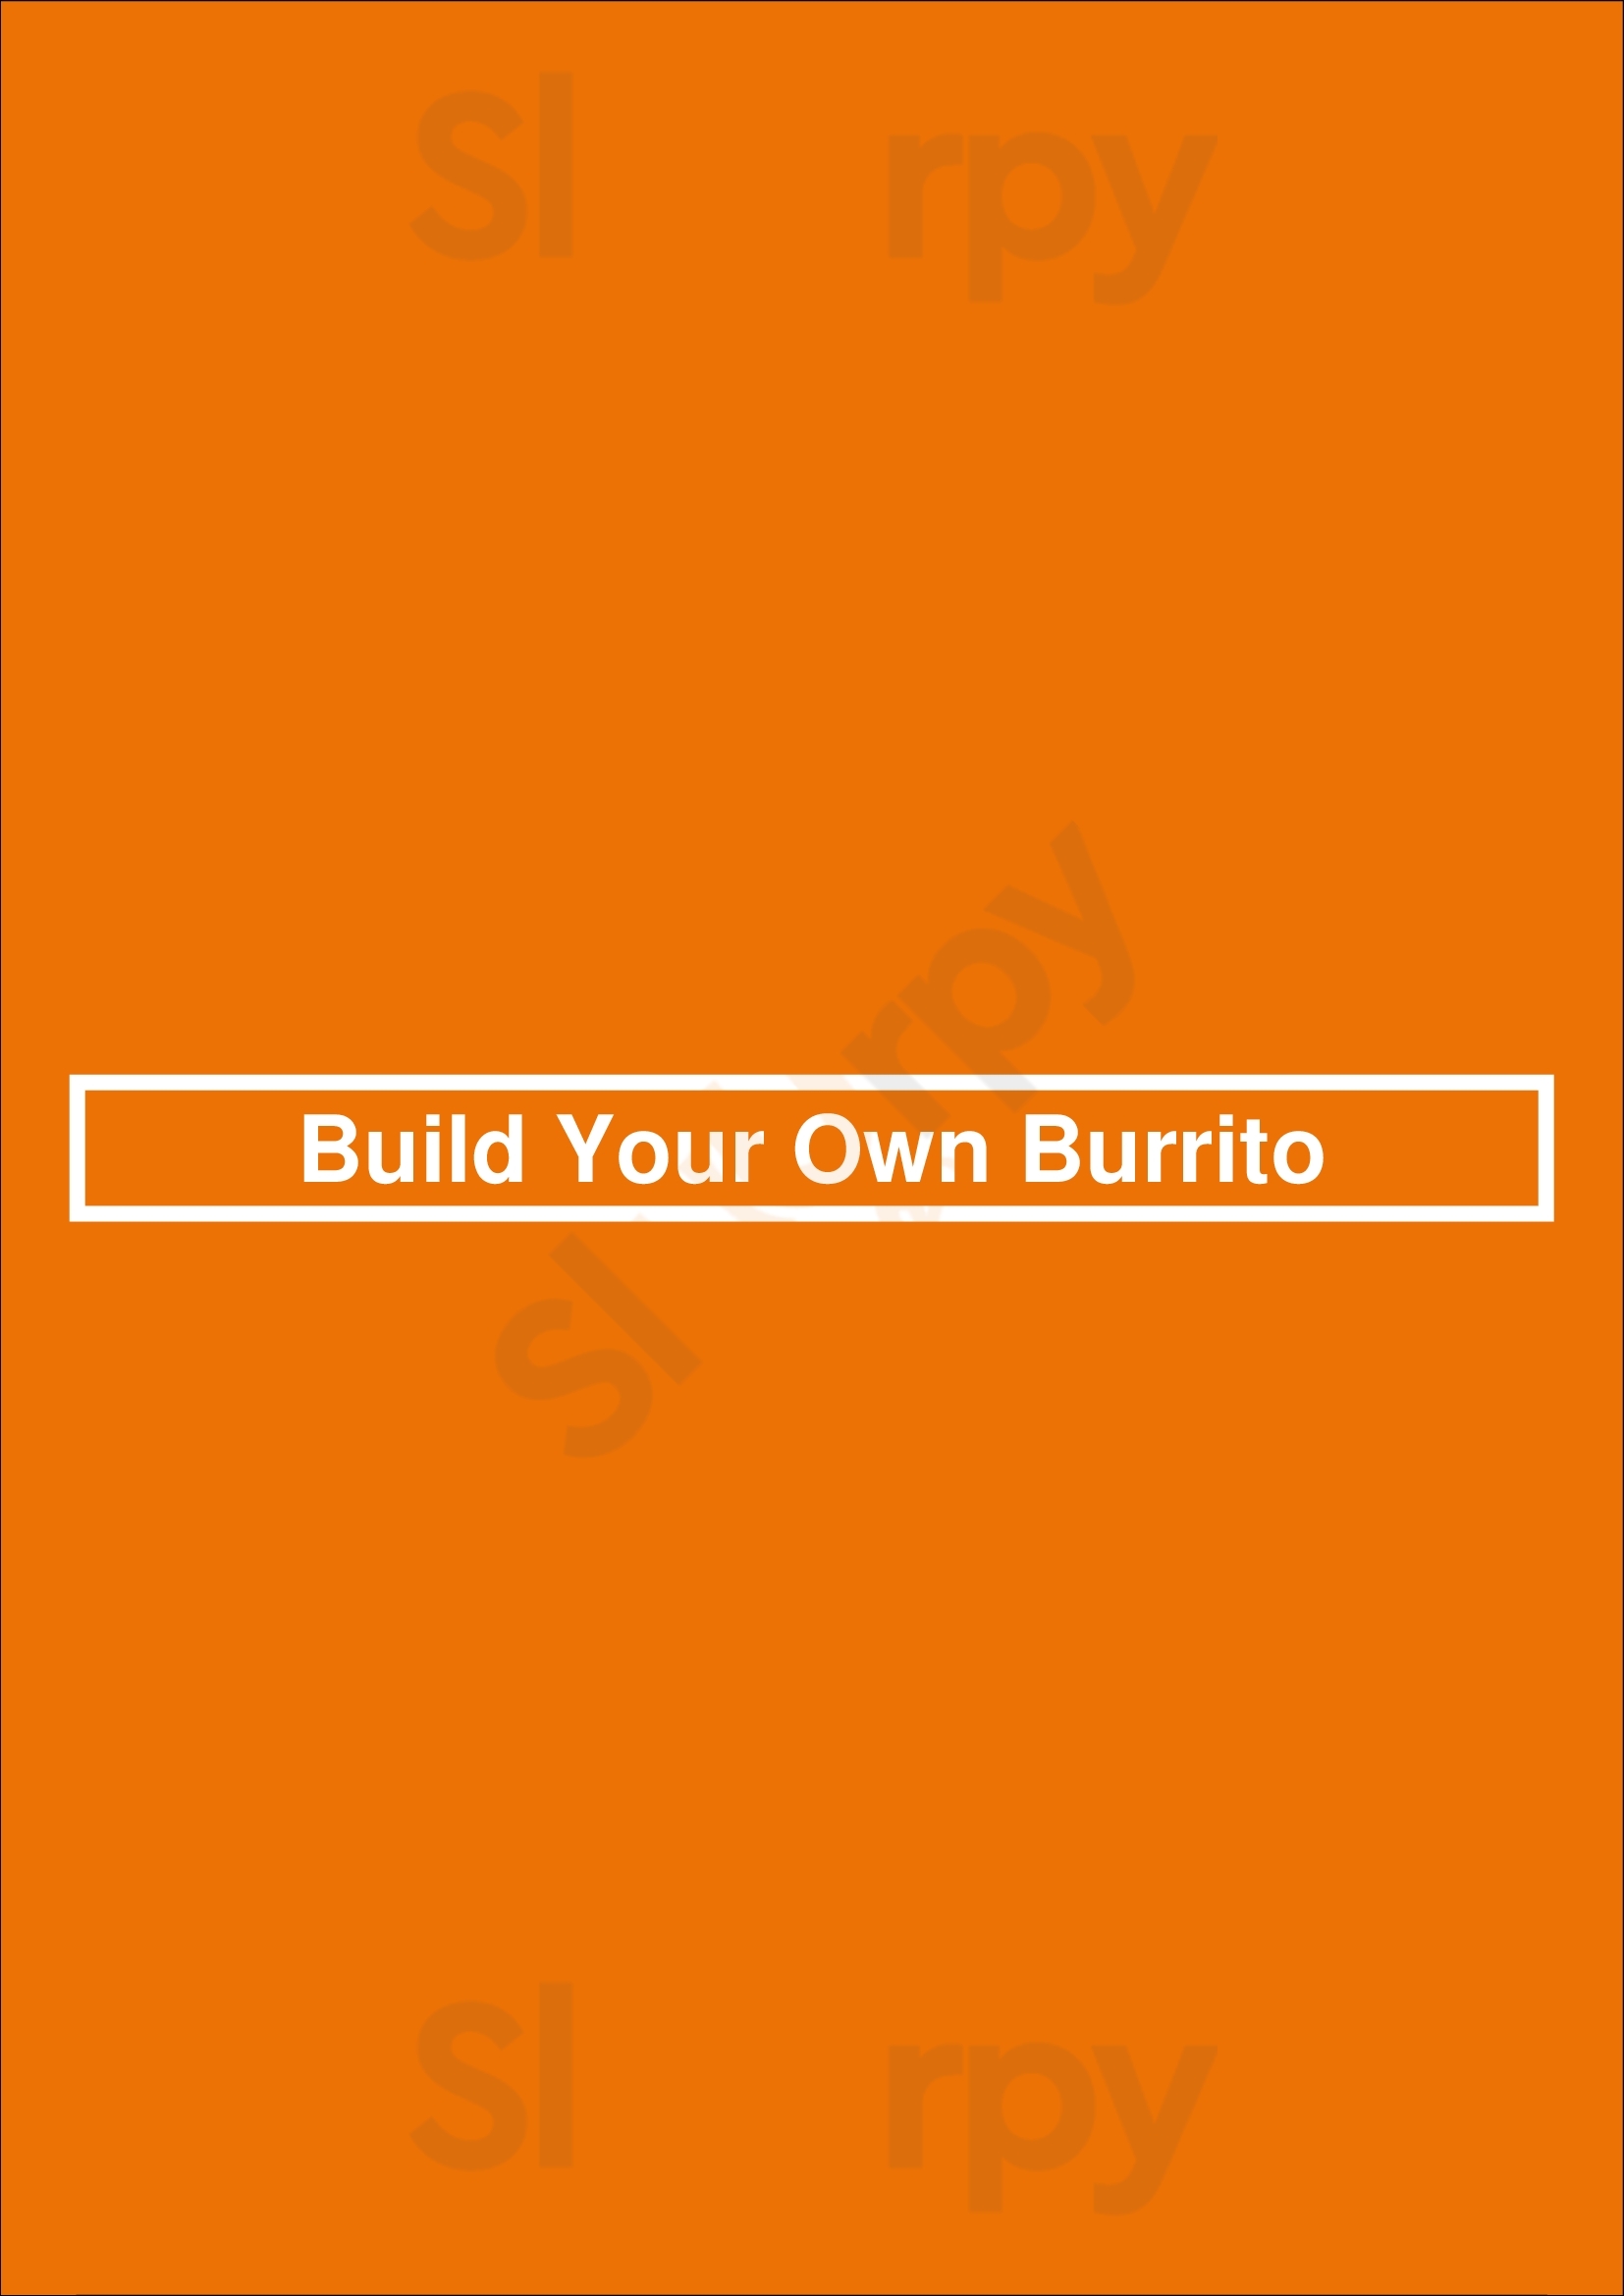 Build Your Own Burrito Flat Rock Menu - 1